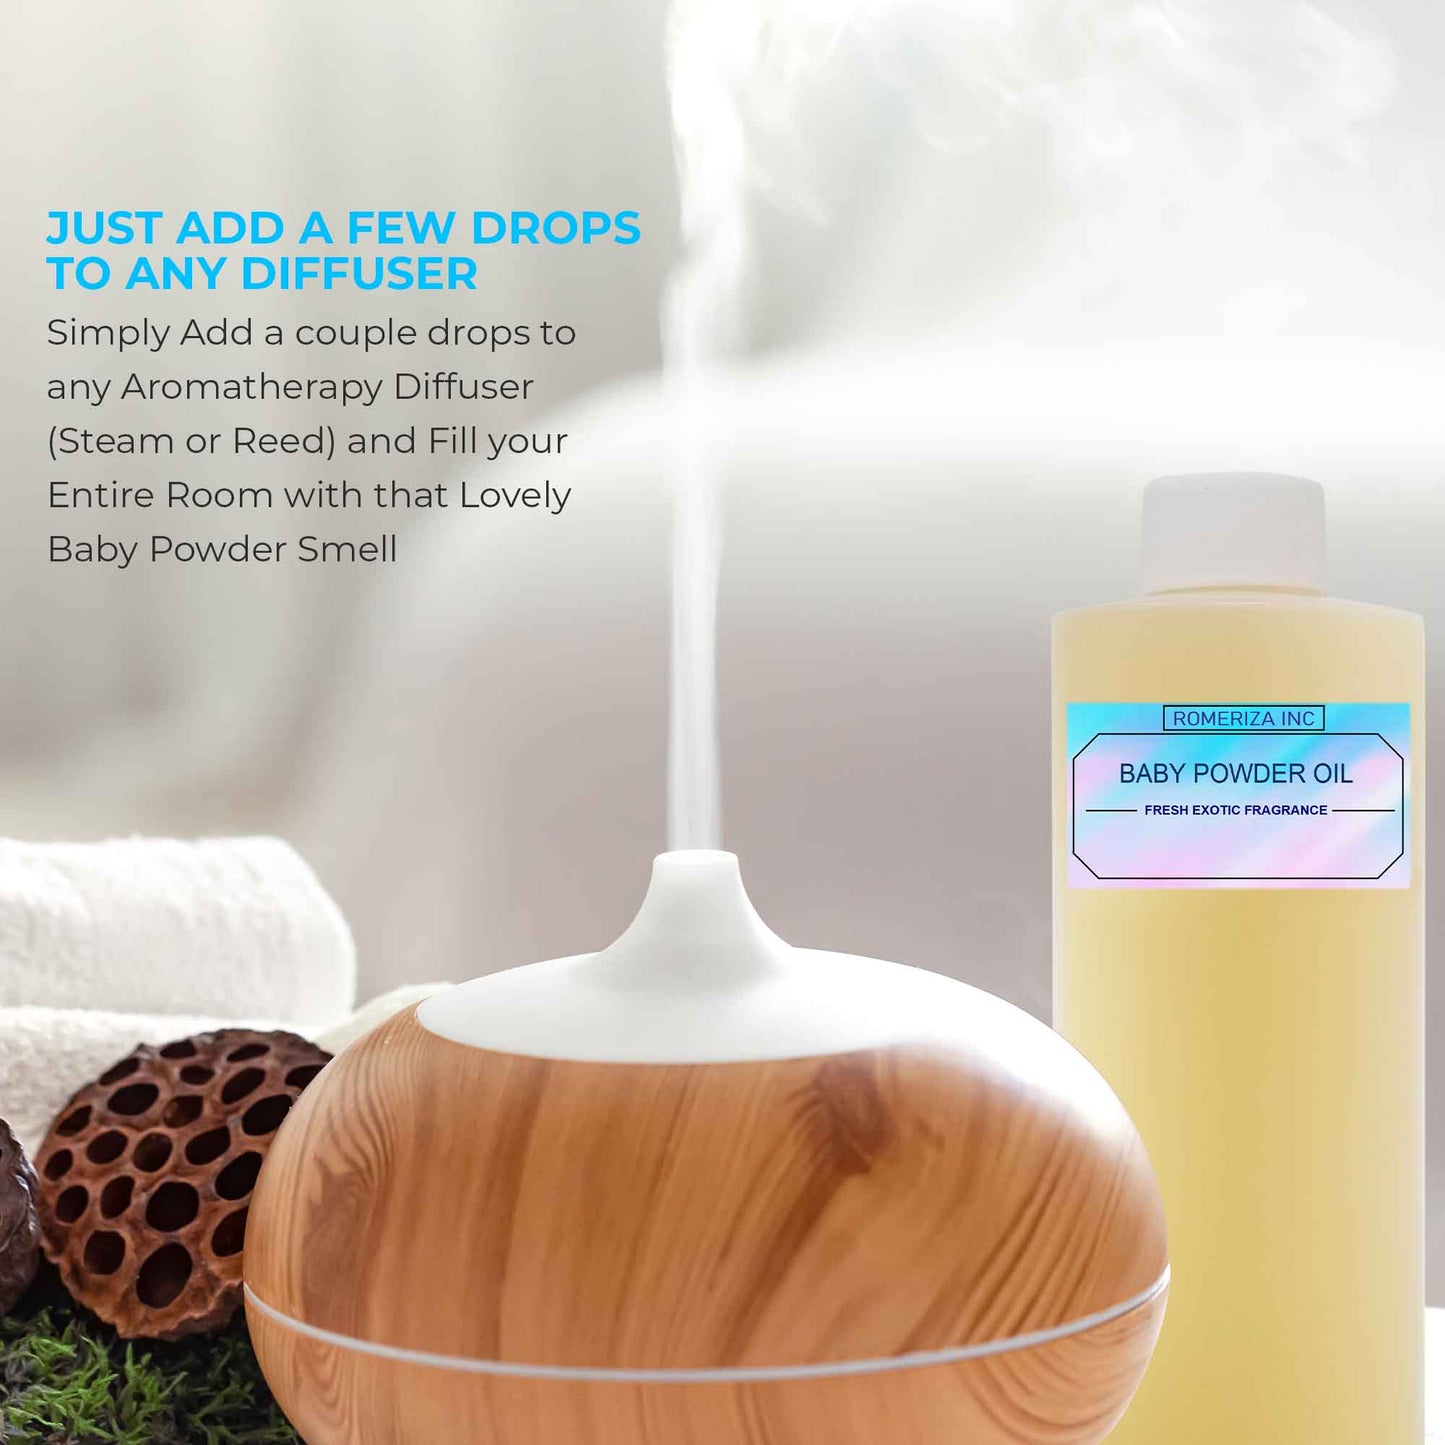 Romeriza inc Baby Powder Fragrance Oil - Gentle Powder Oil Perfect for